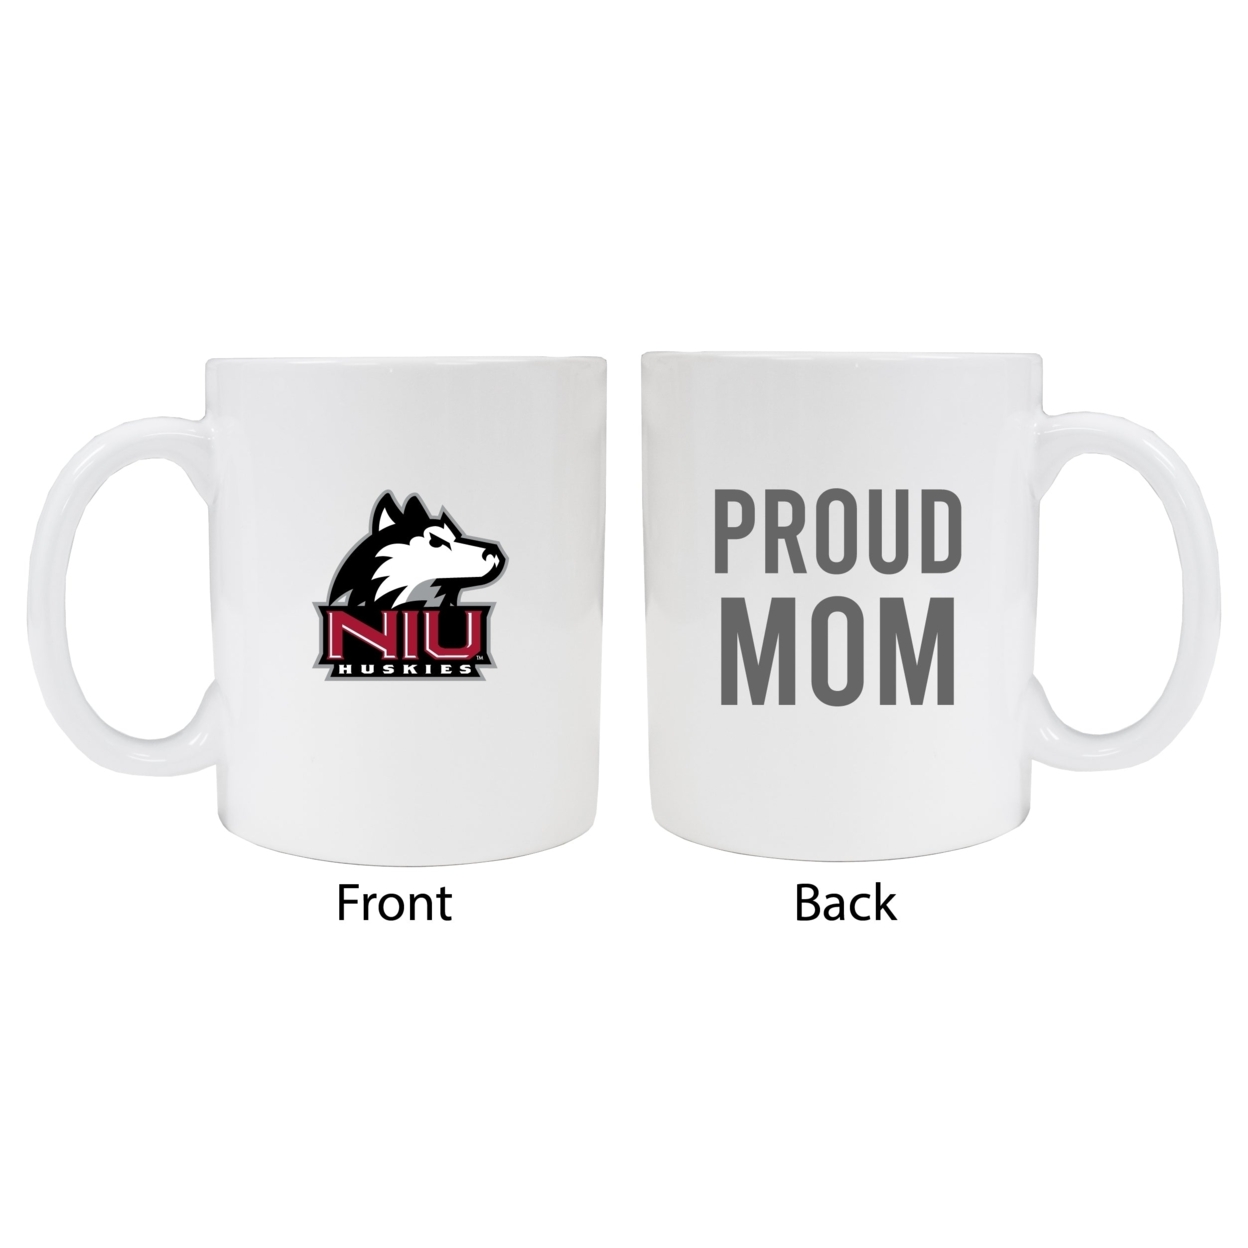 Northern Illinois Huskies Proud Mom Ceramic Coffee Mug - White (2 Pack)